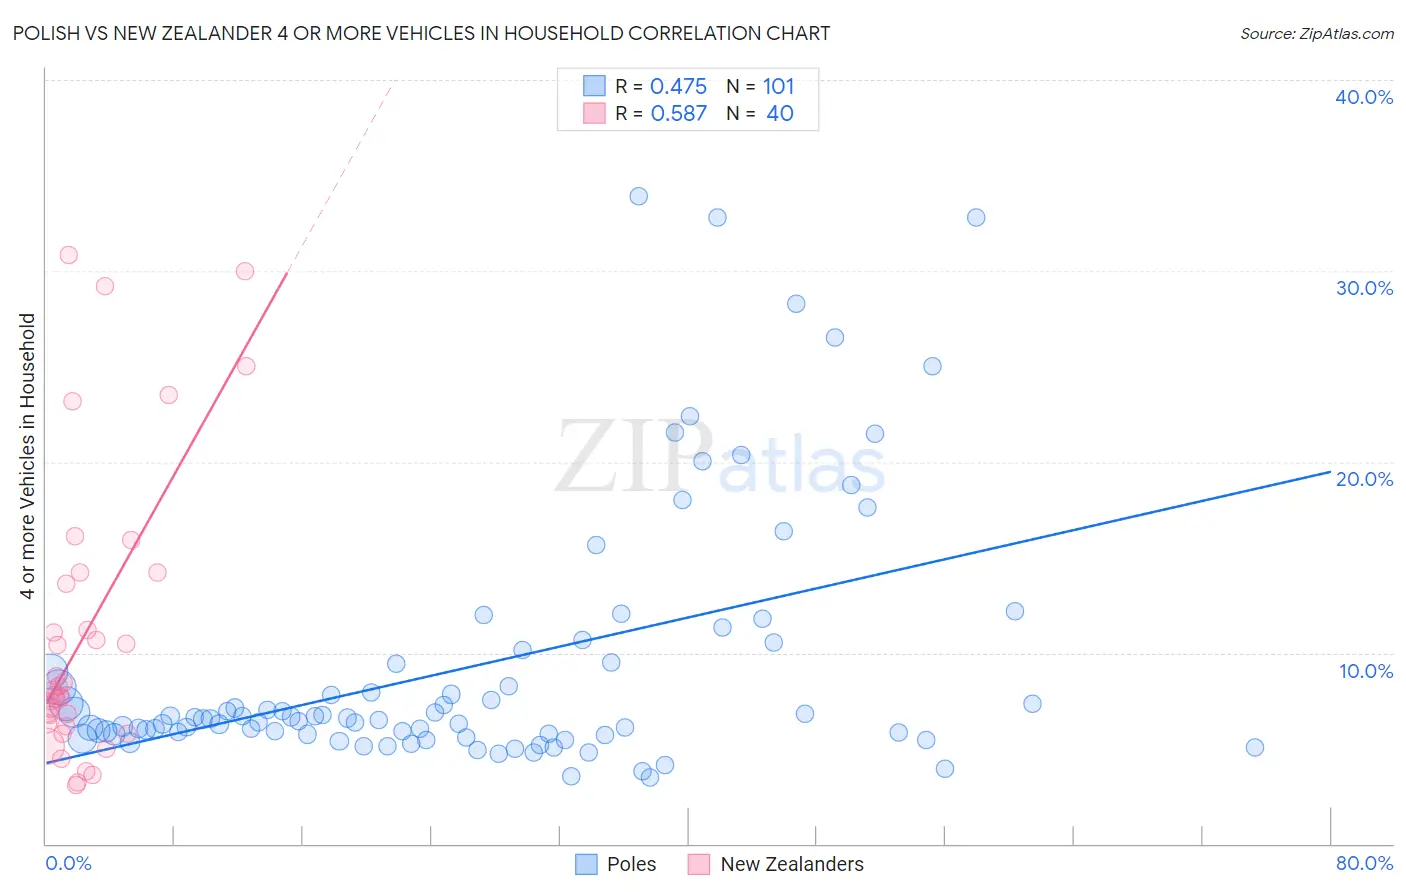 Polish vs New Zealander 4 or more Vehicles in Household